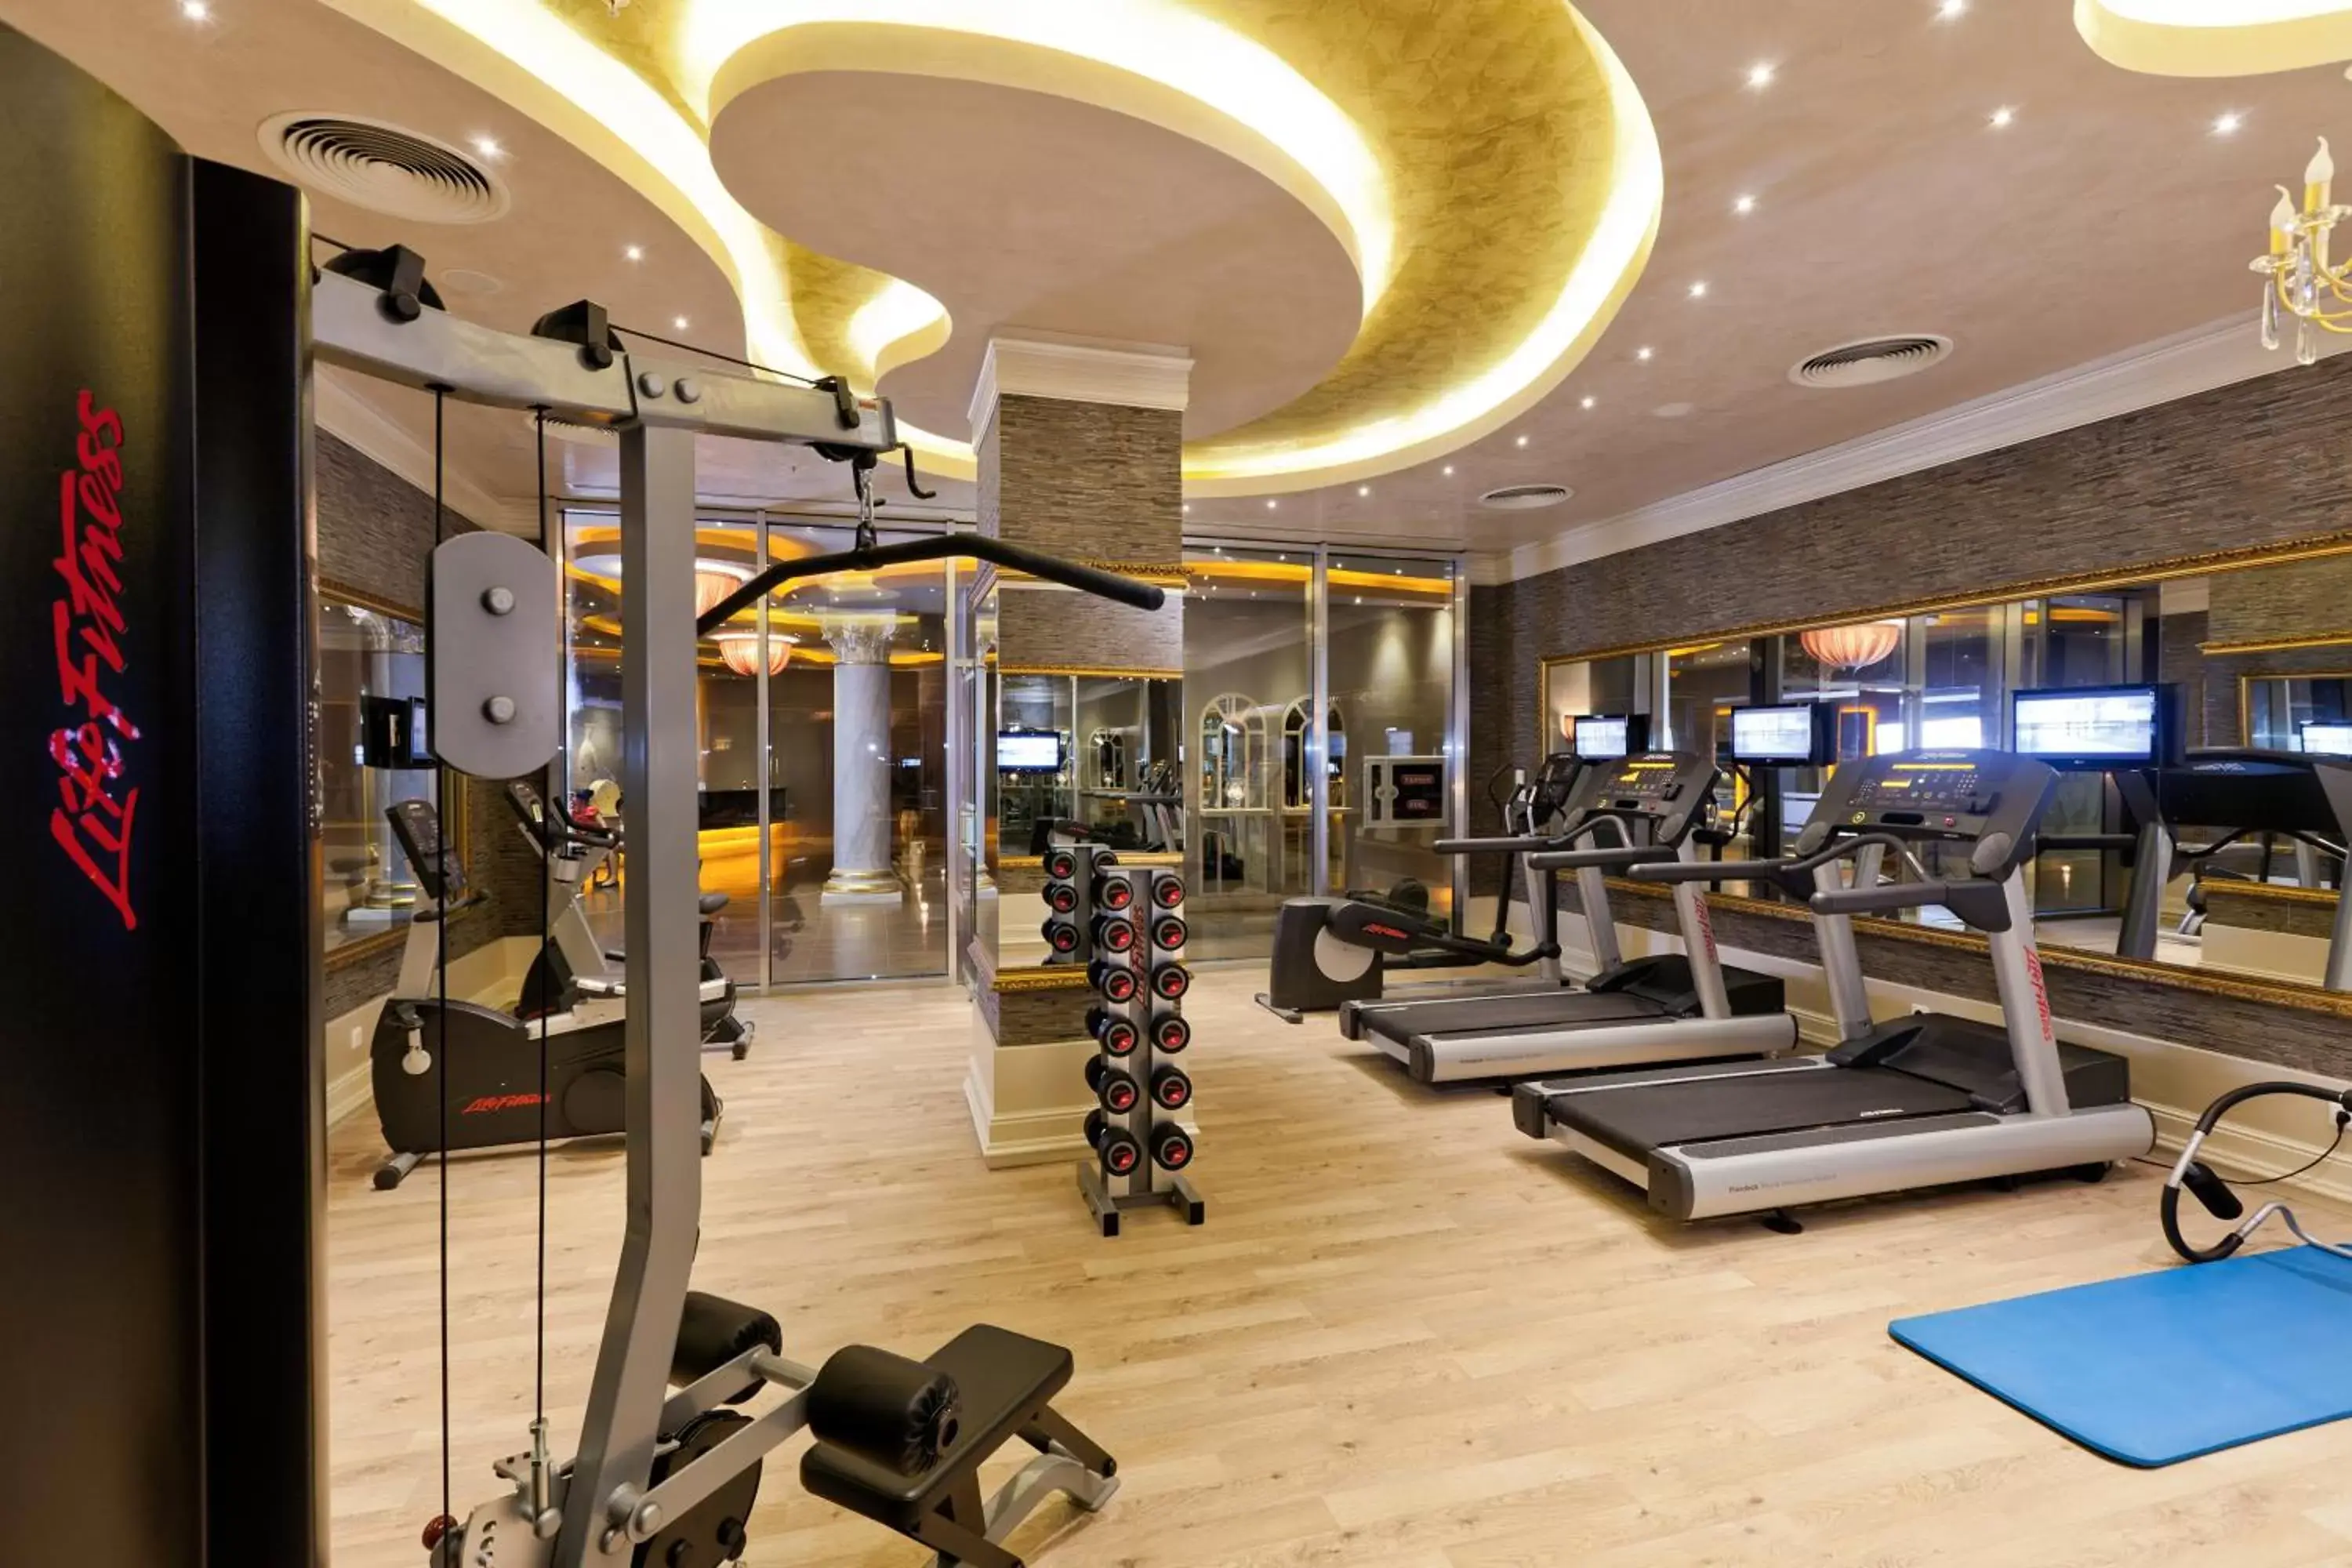 Fitness centre/facilities, Fitness Center/Facilities in Limak Eurasia Luxury Hotel